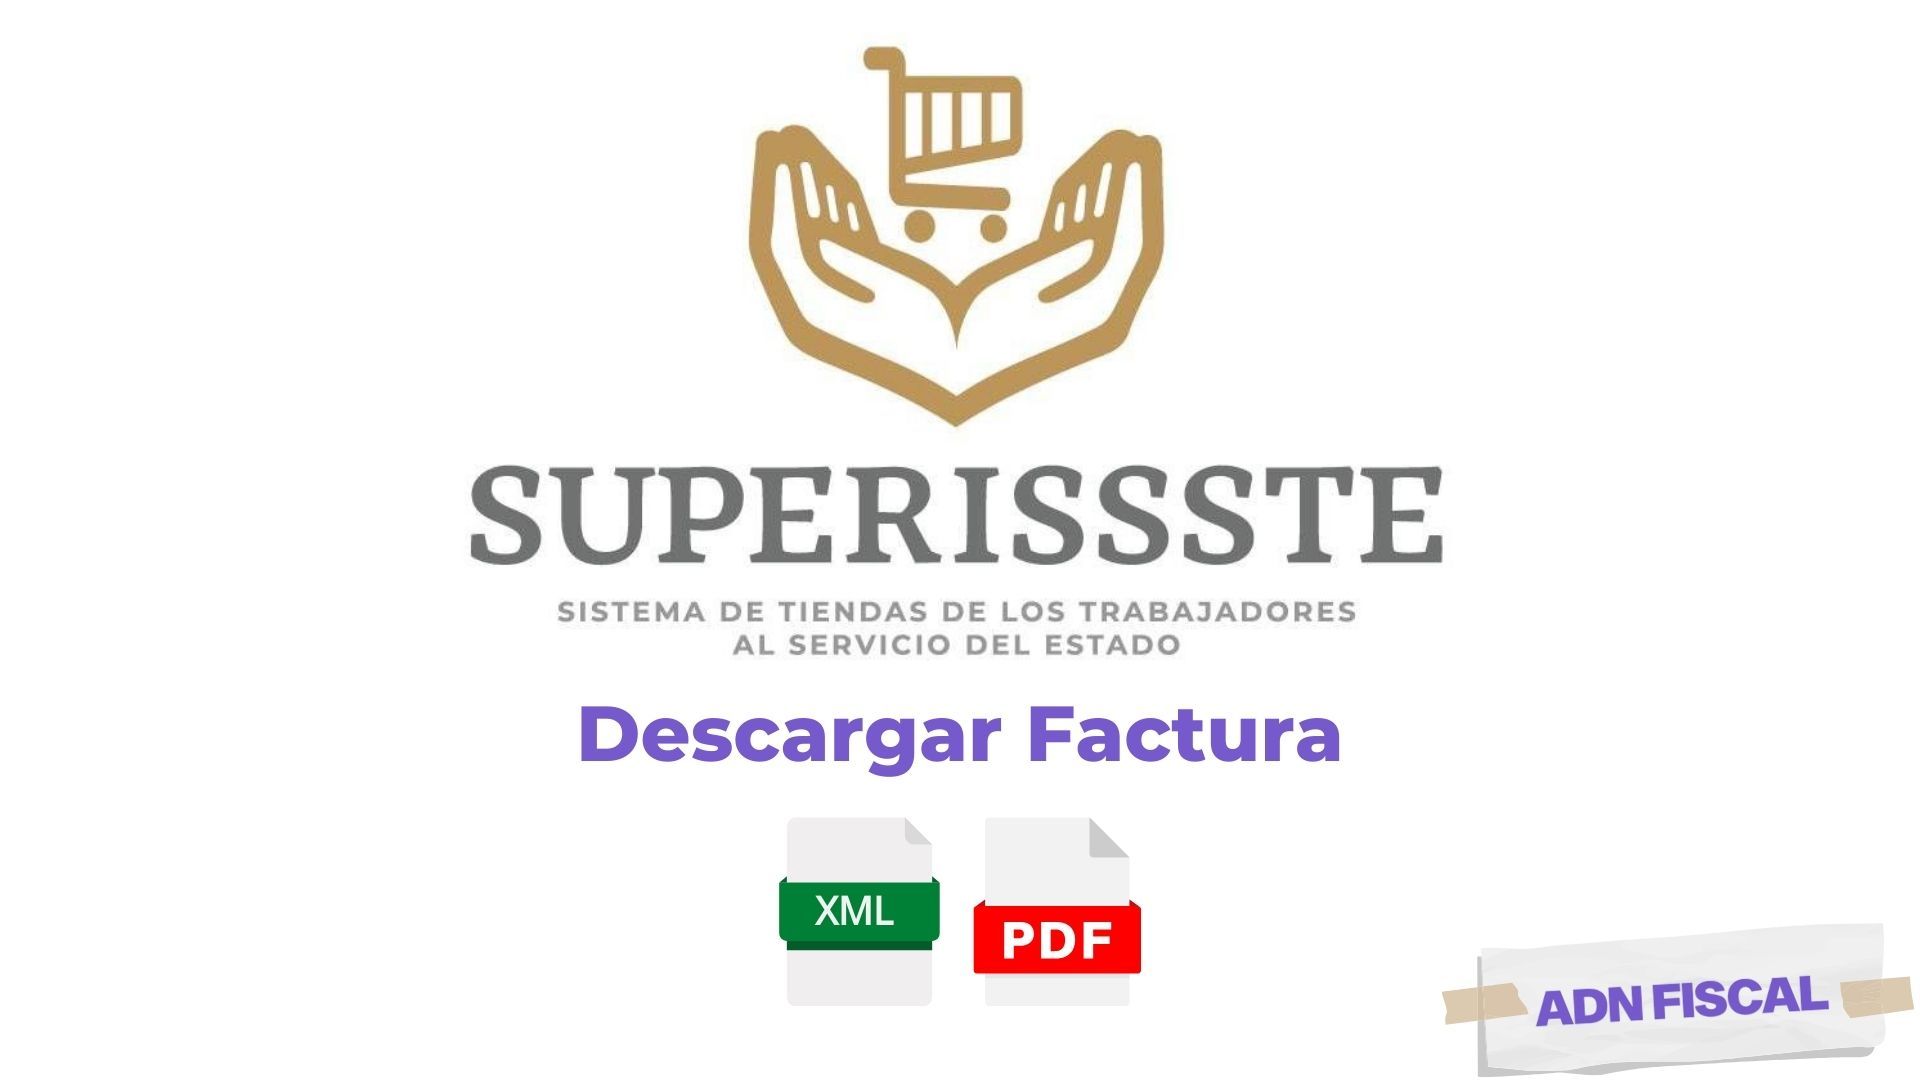 Facturacion SuperISSSTE Facturacion ADN Fiscal